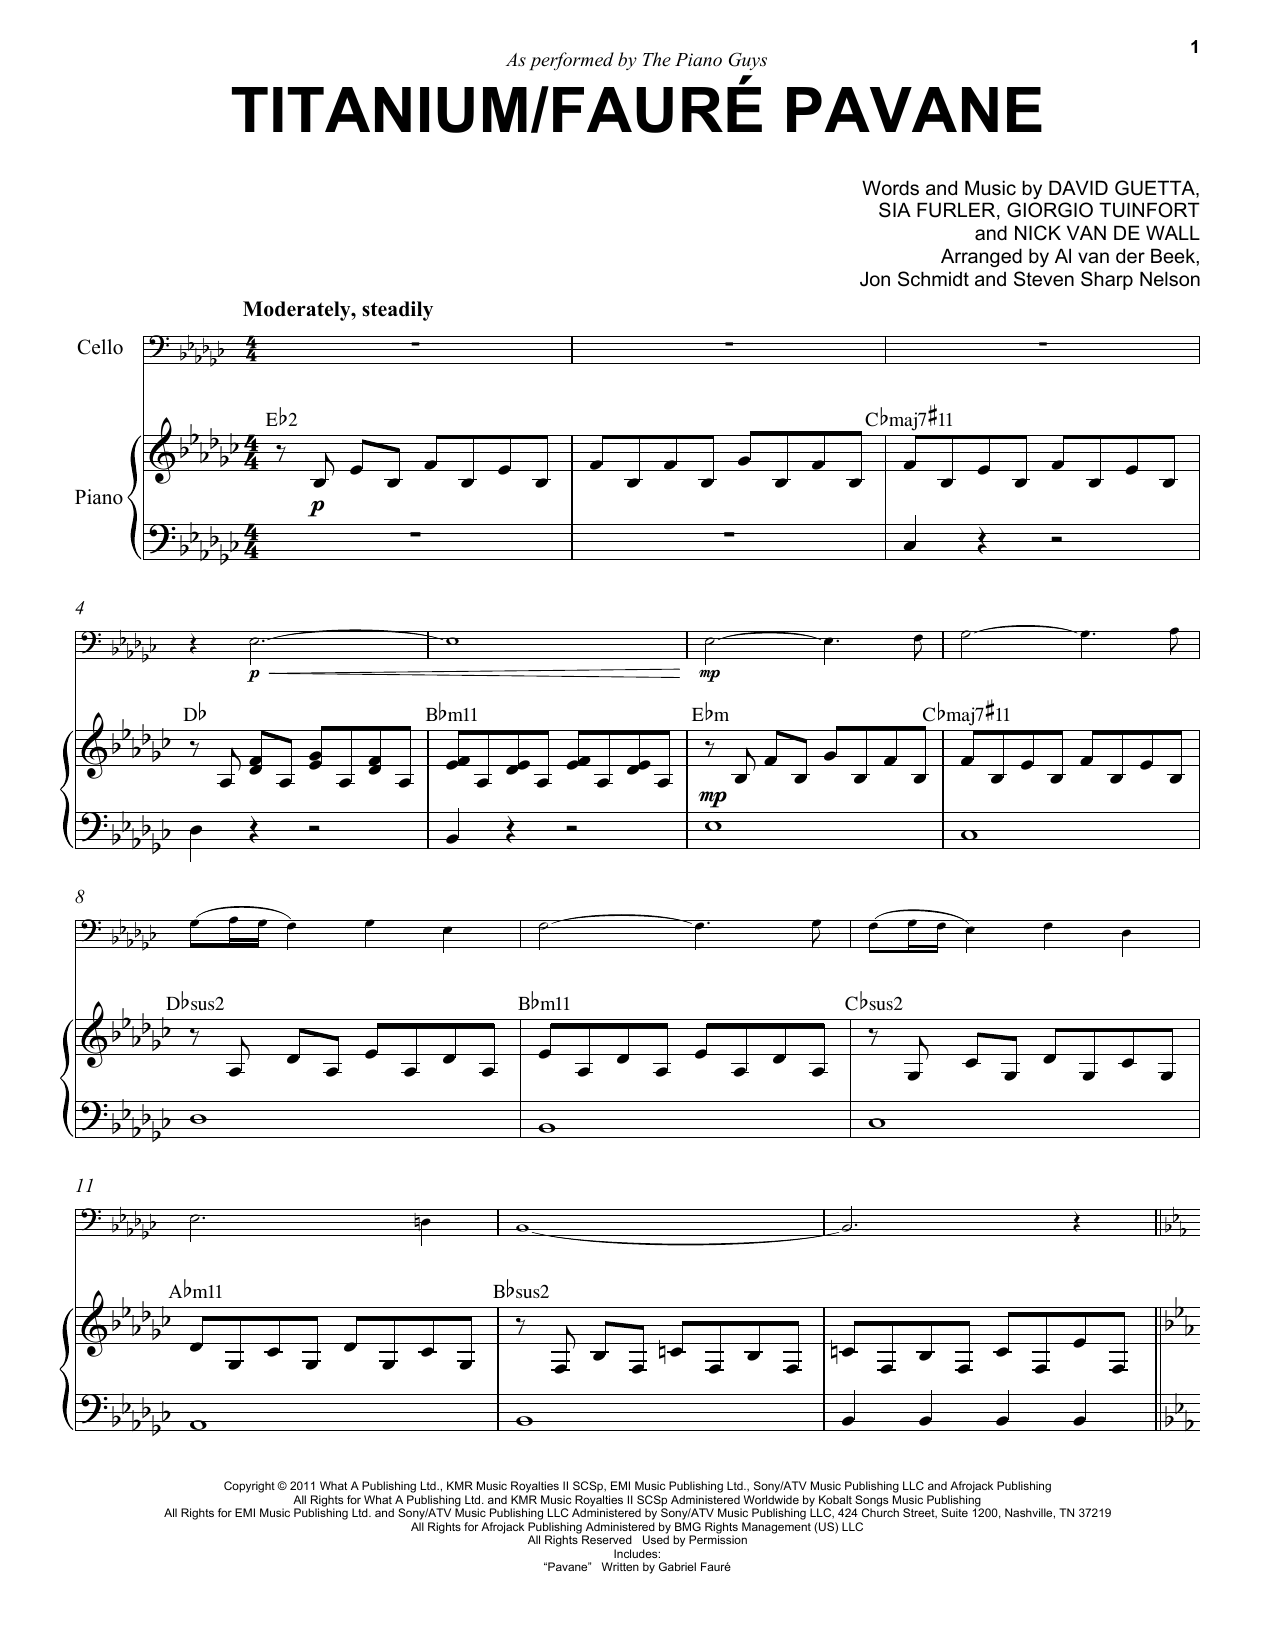 Download The Piano Guys Titanium/Fauré Pavane Sheet Music